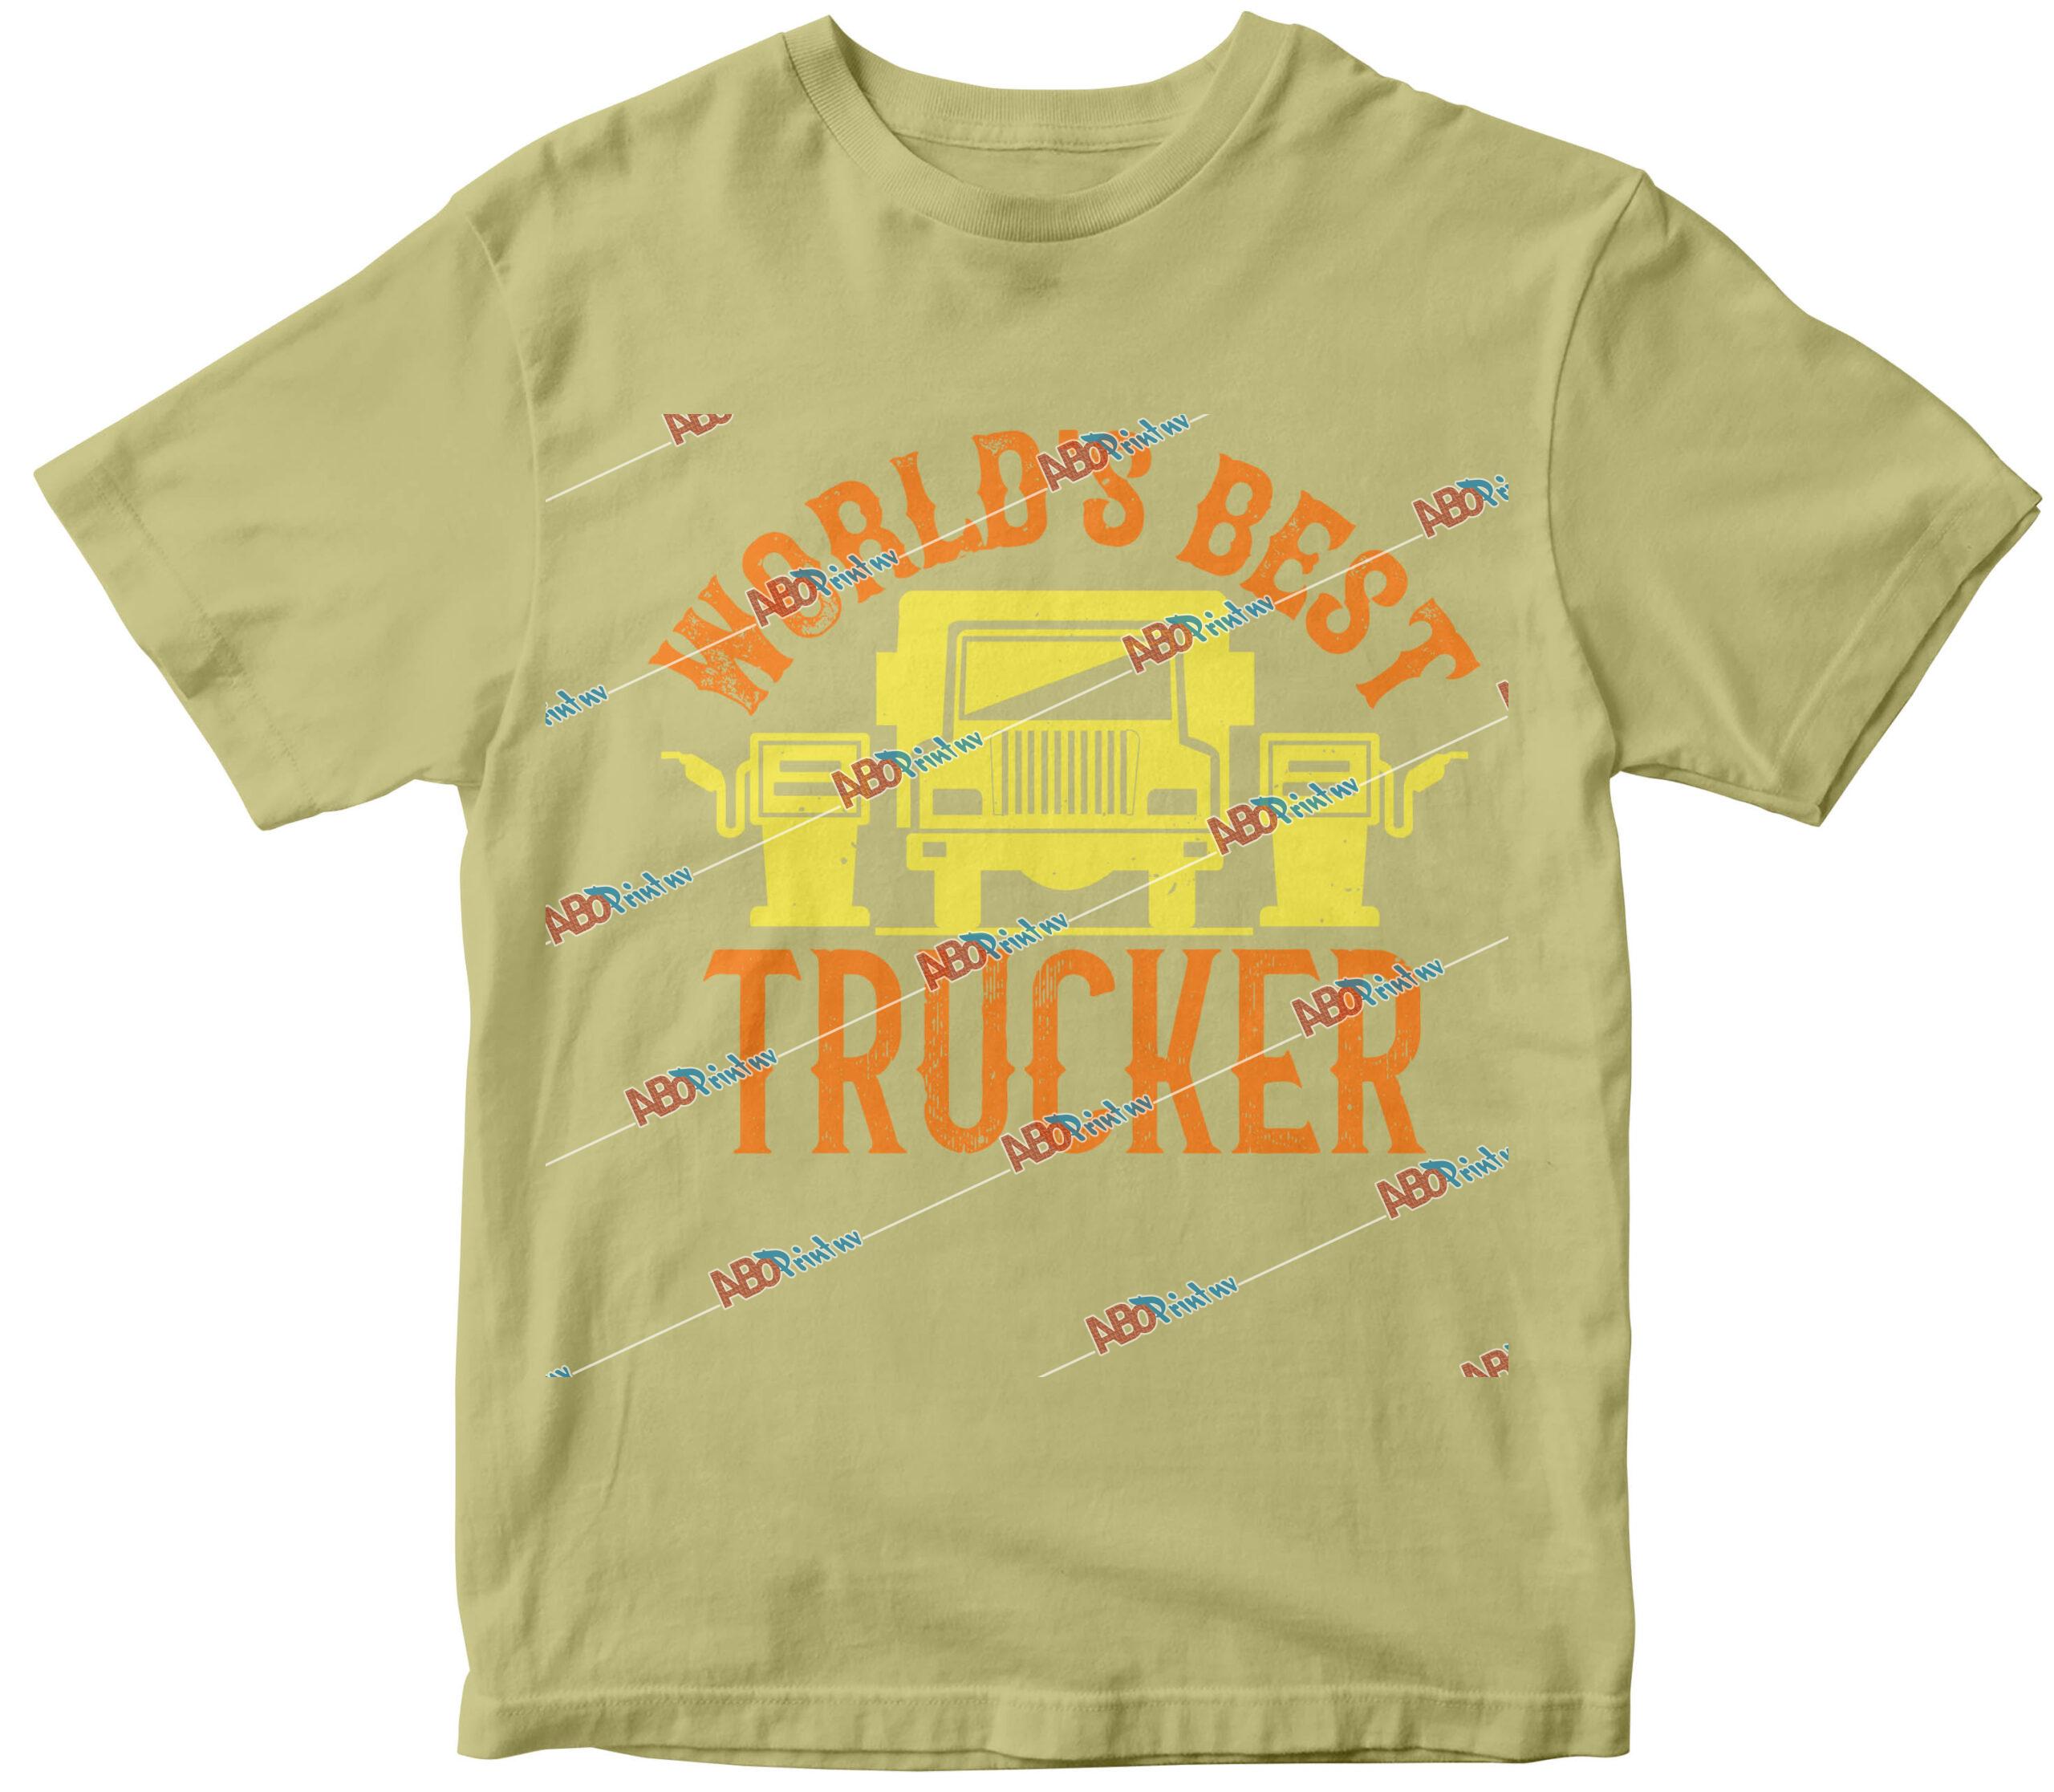 World_s best trucker.jpg